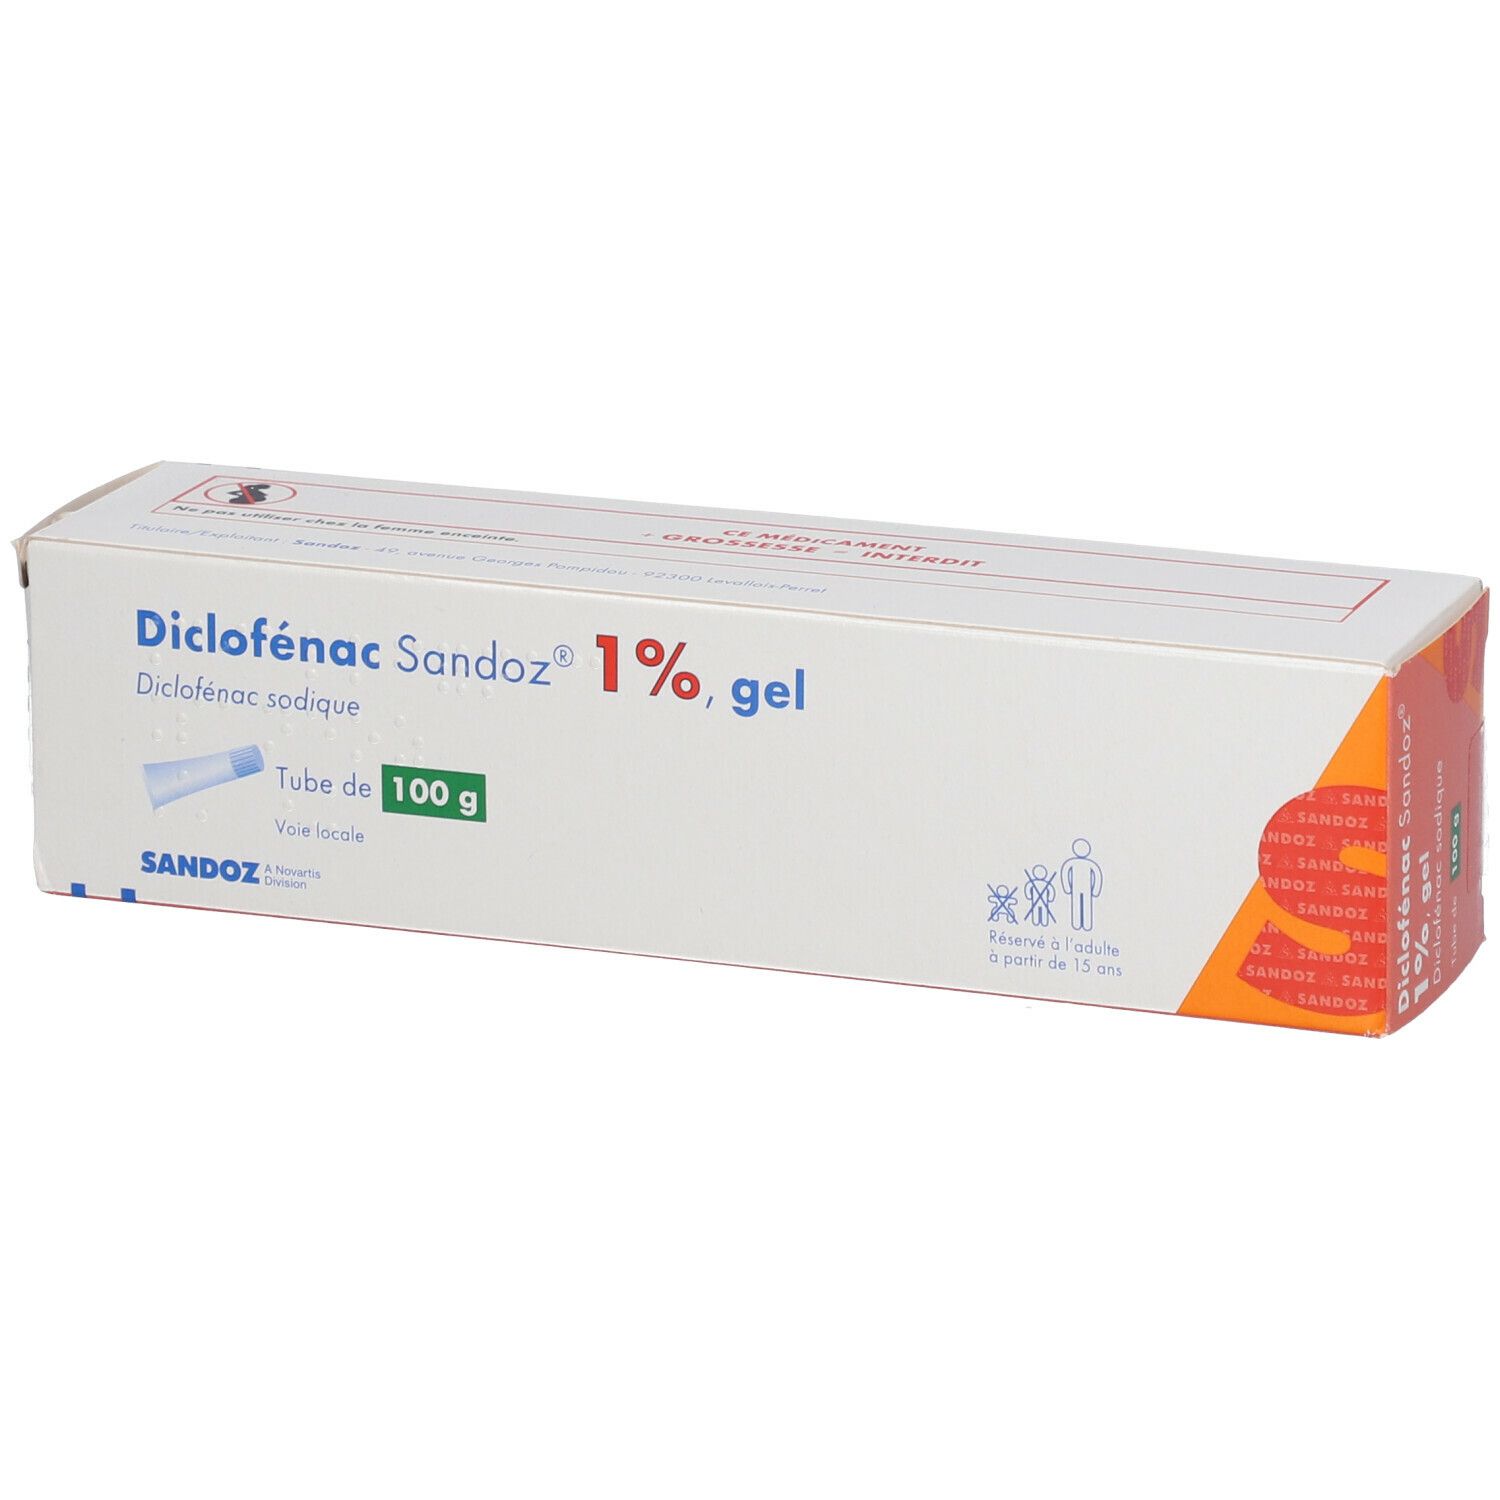 Diclofénac Sandoz® 1% gel